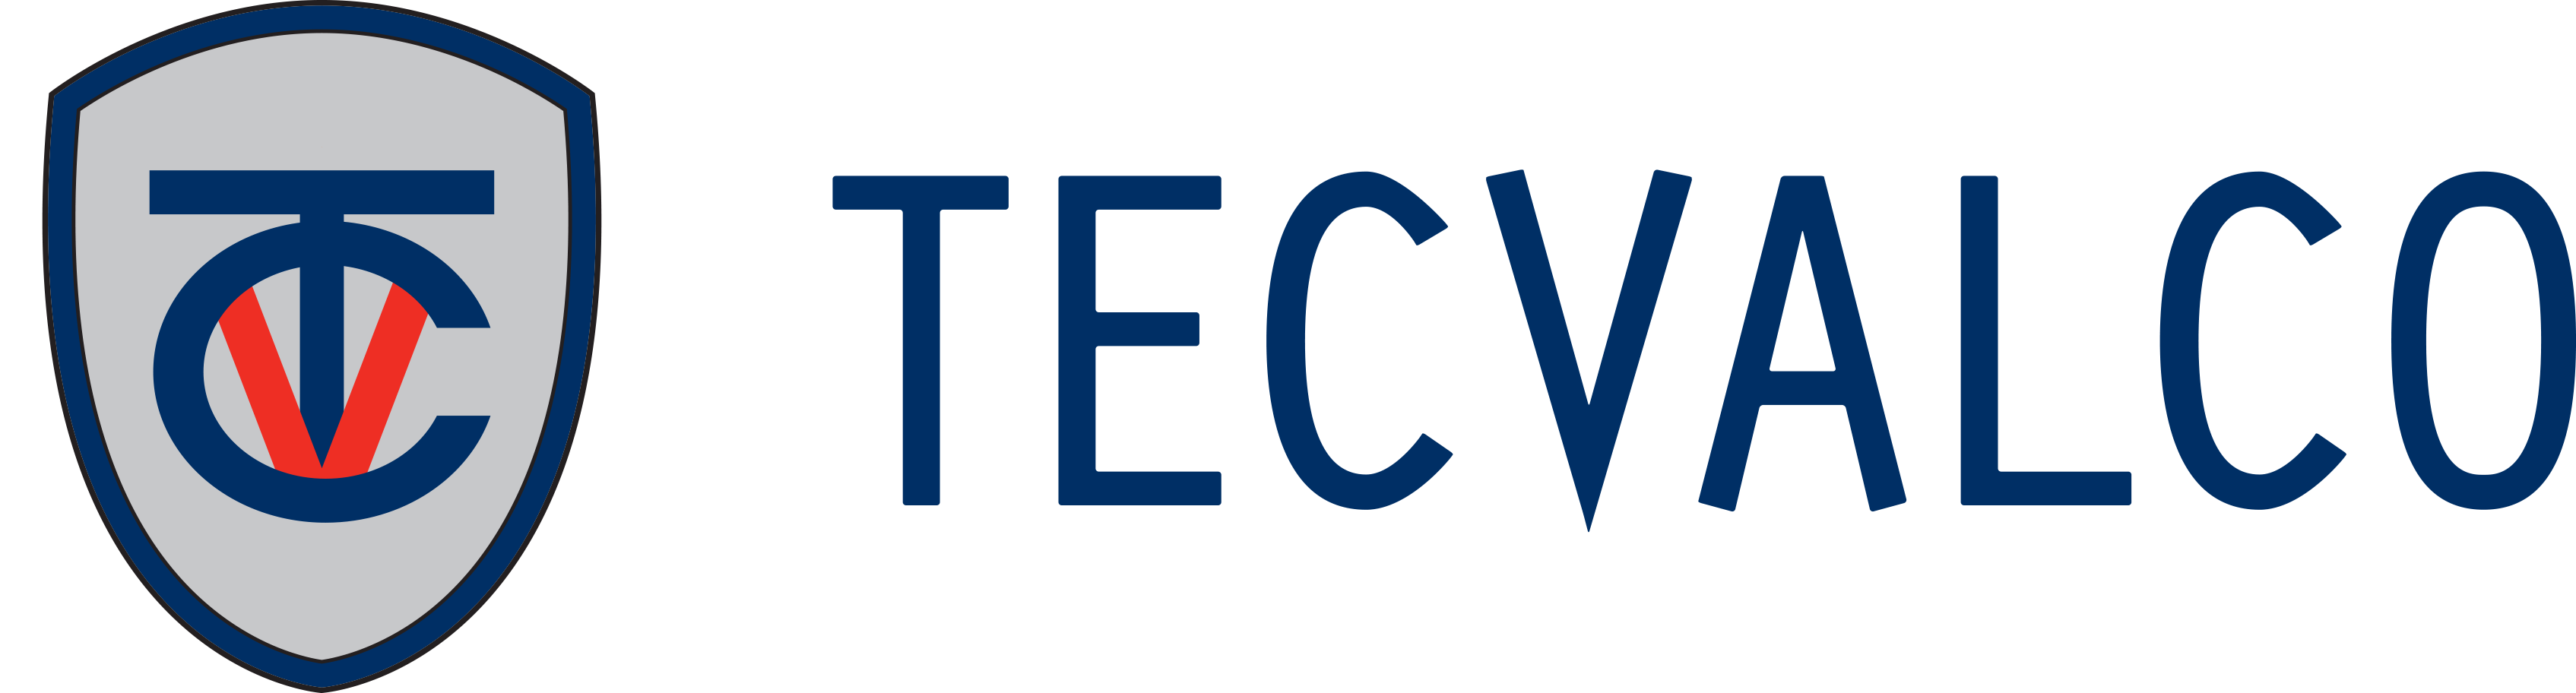 1732-tecvalco-logo-2017-horizontal-spot-colour-16442595601111.png